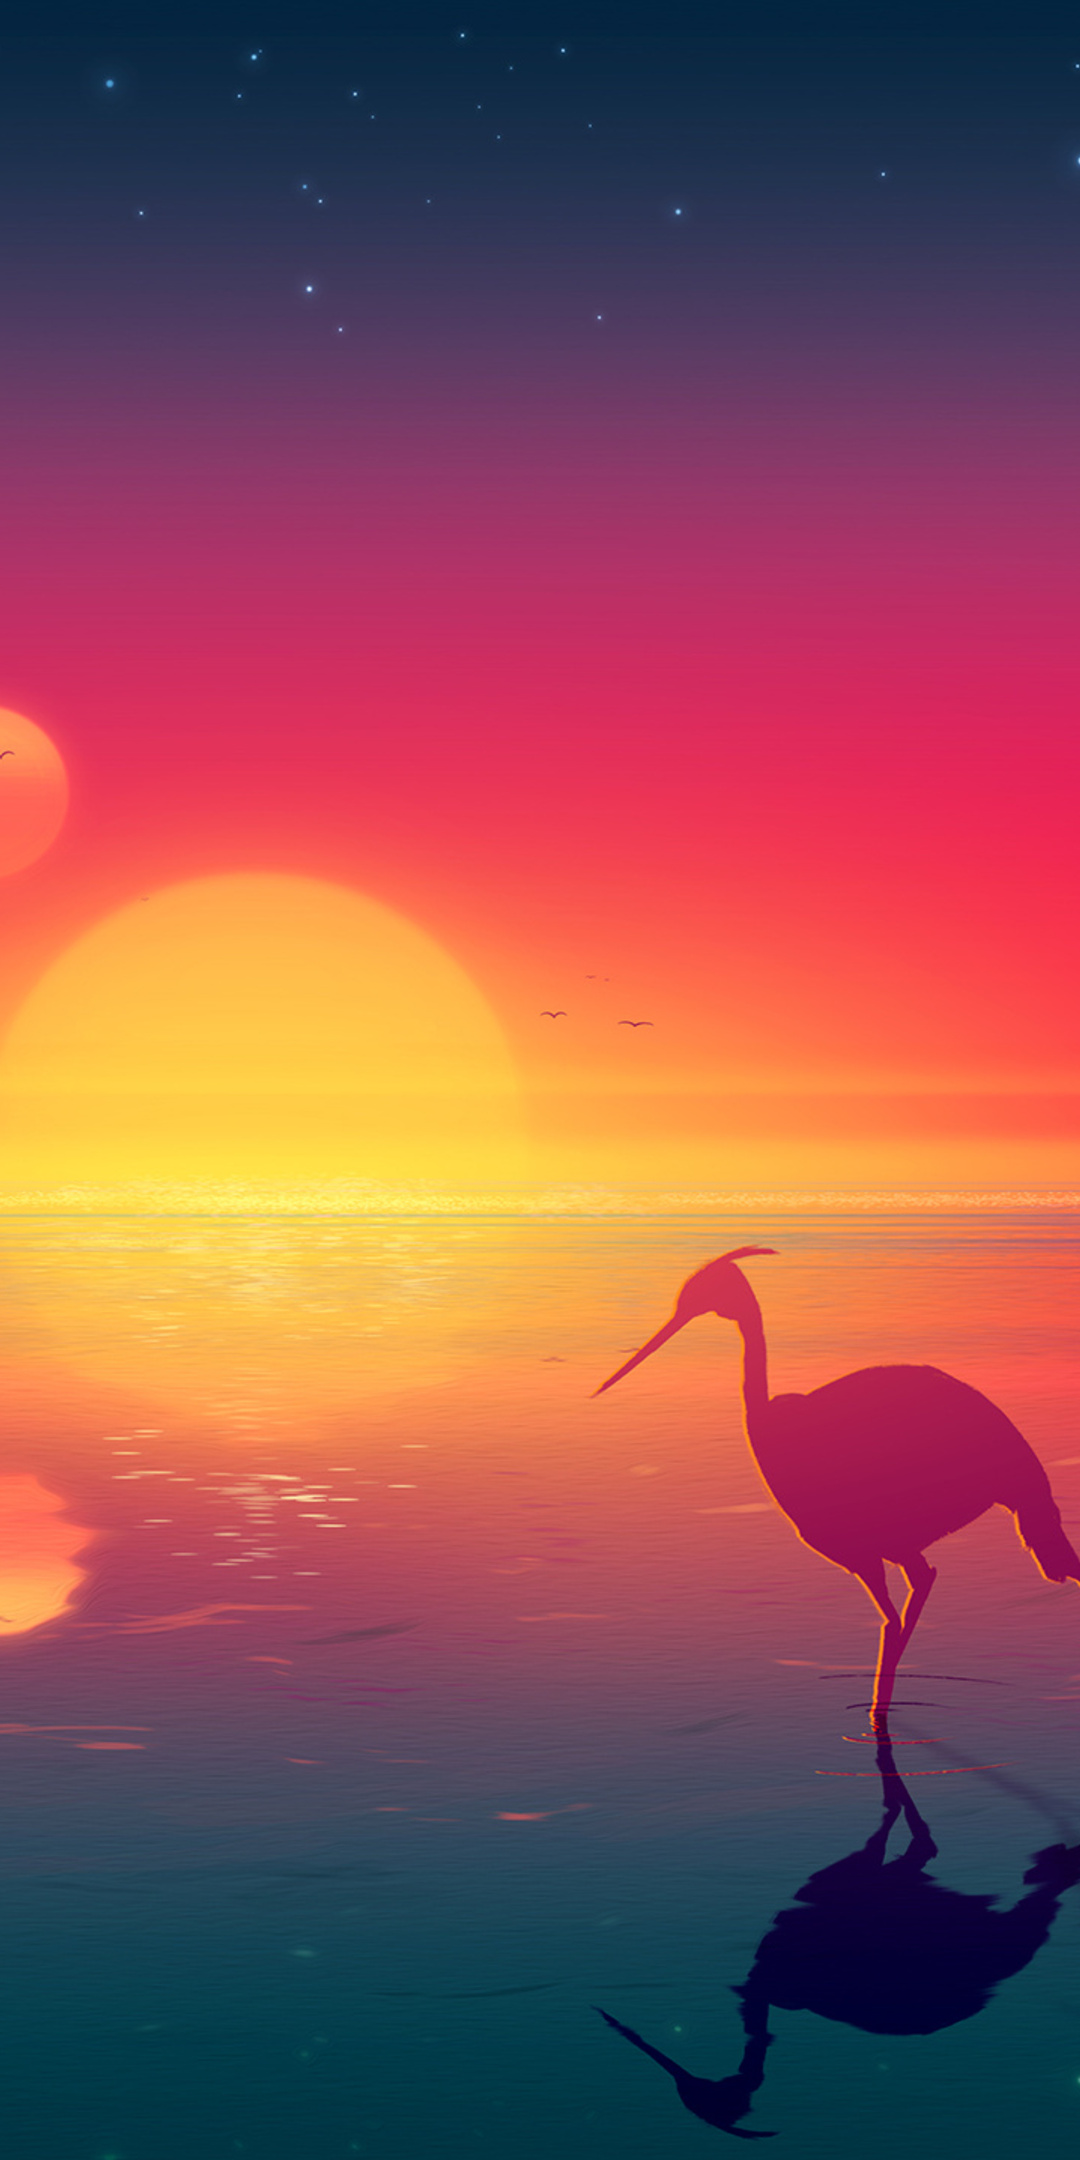 flamingo-digital-art-ra.jpg